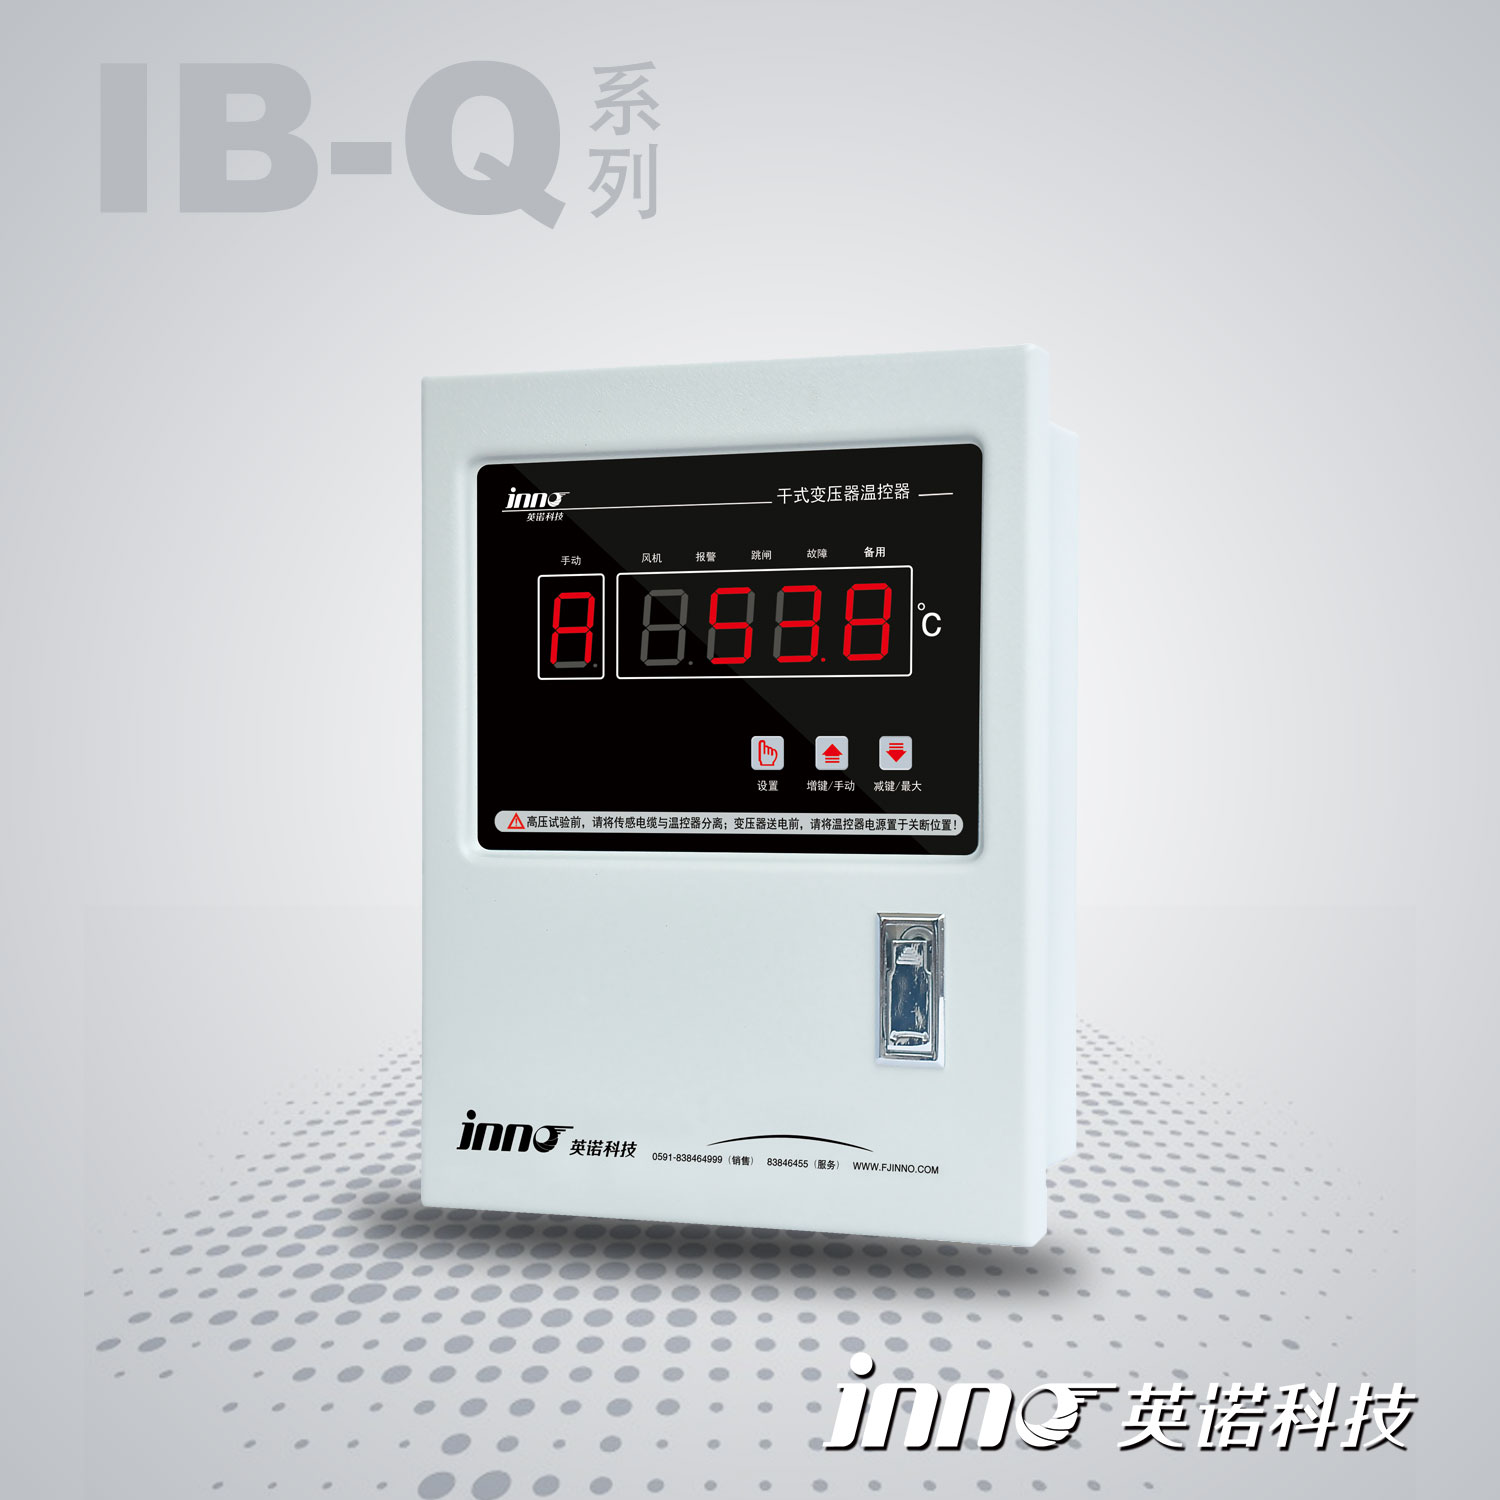 IB-Q201 干式變壓器溫控器